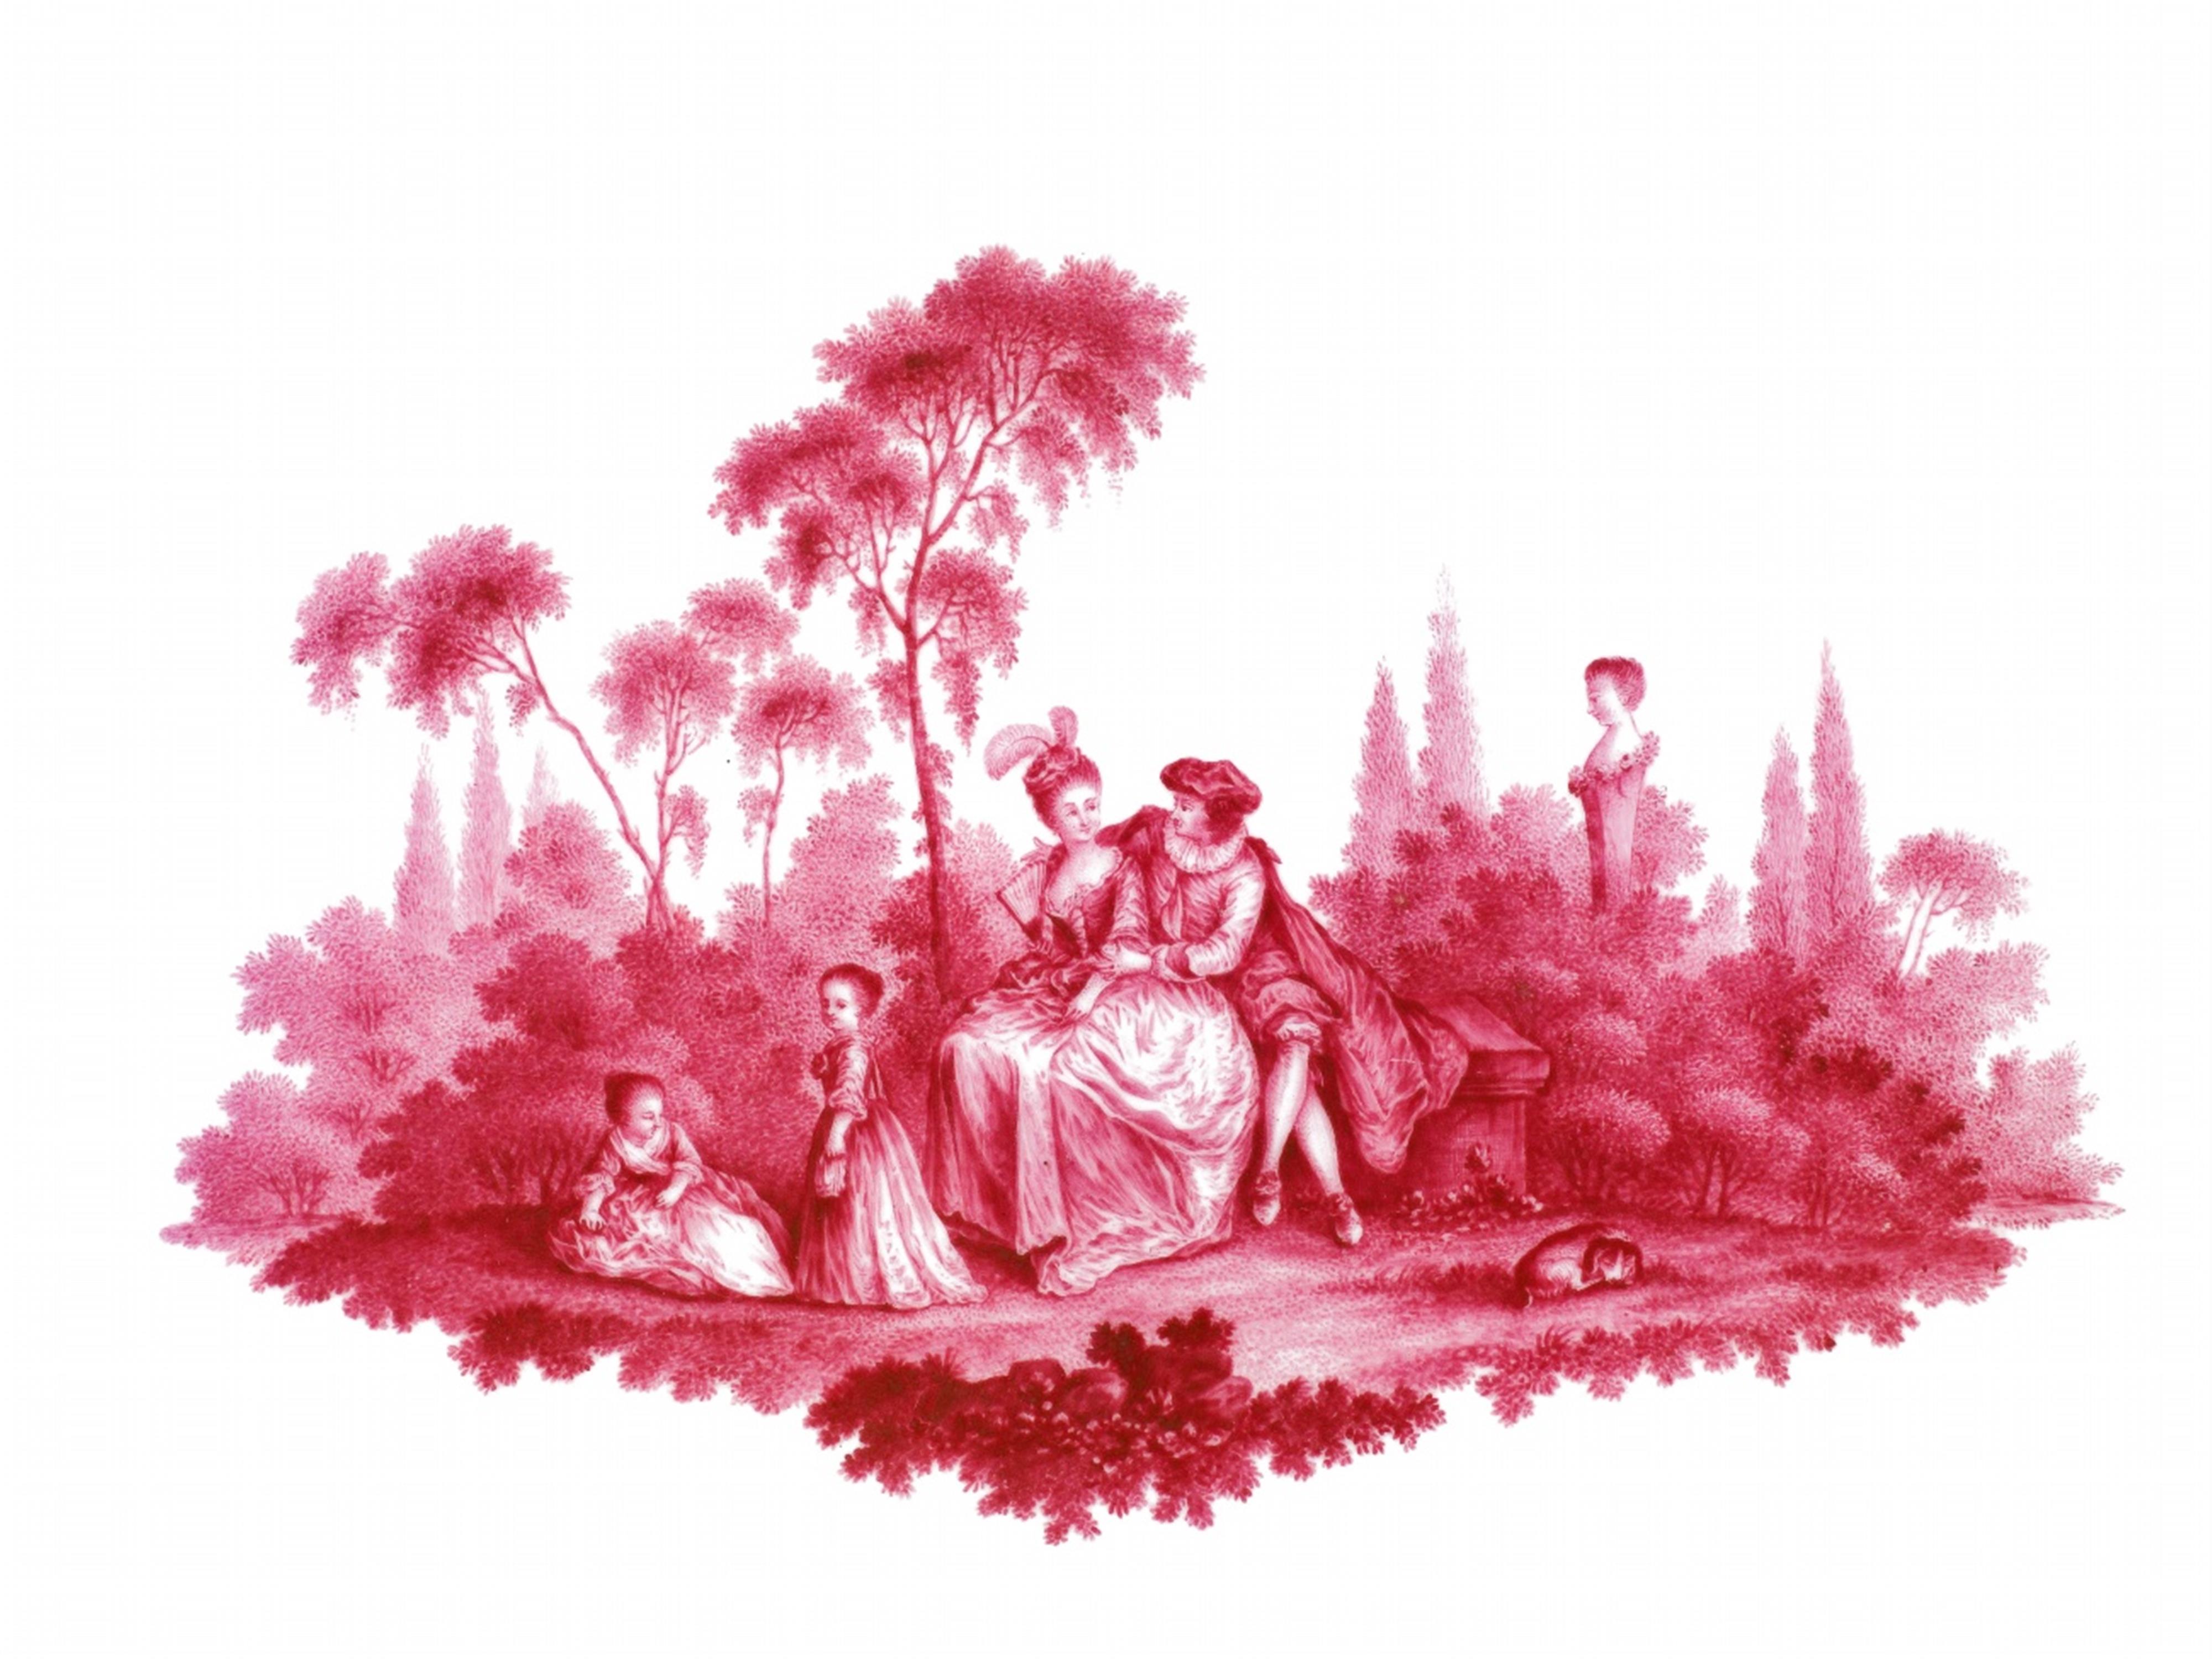 Tête-à-tête mit purpurnen Watteauszenen - image-2